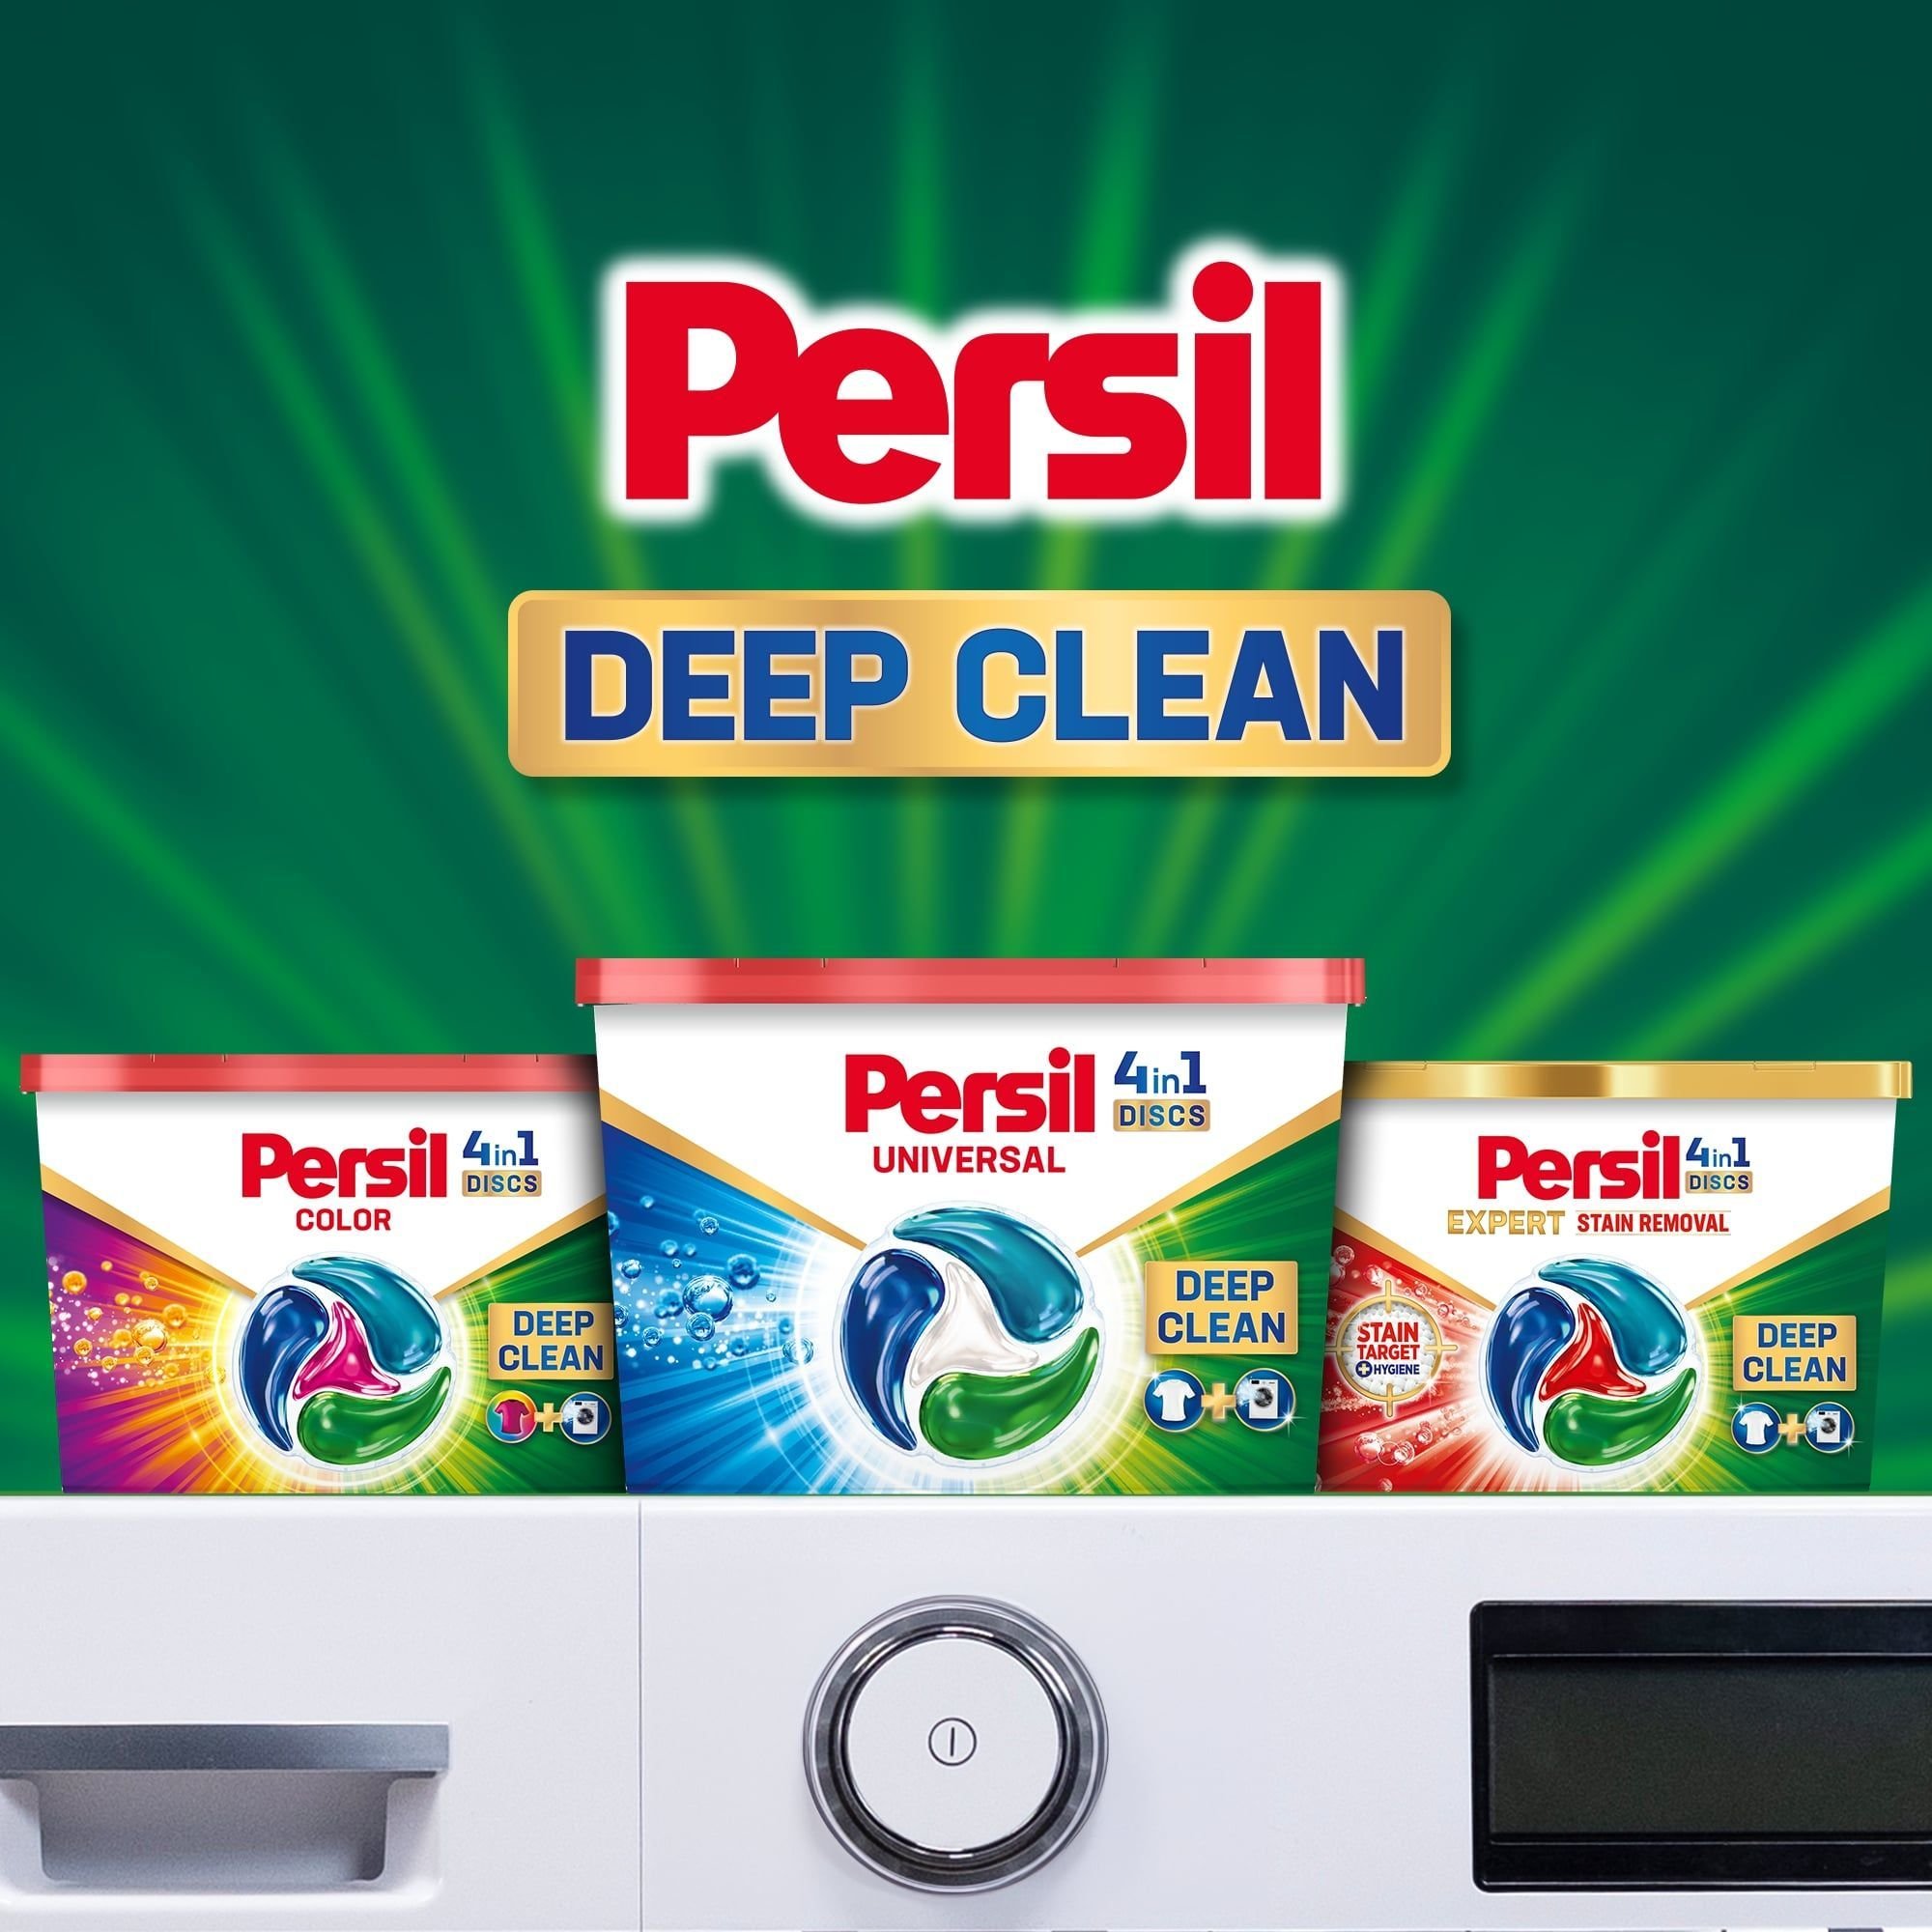 Диски для стирки Persil Deep Cleen Universal 4 in 1 Discs 40 шт. - фото 6